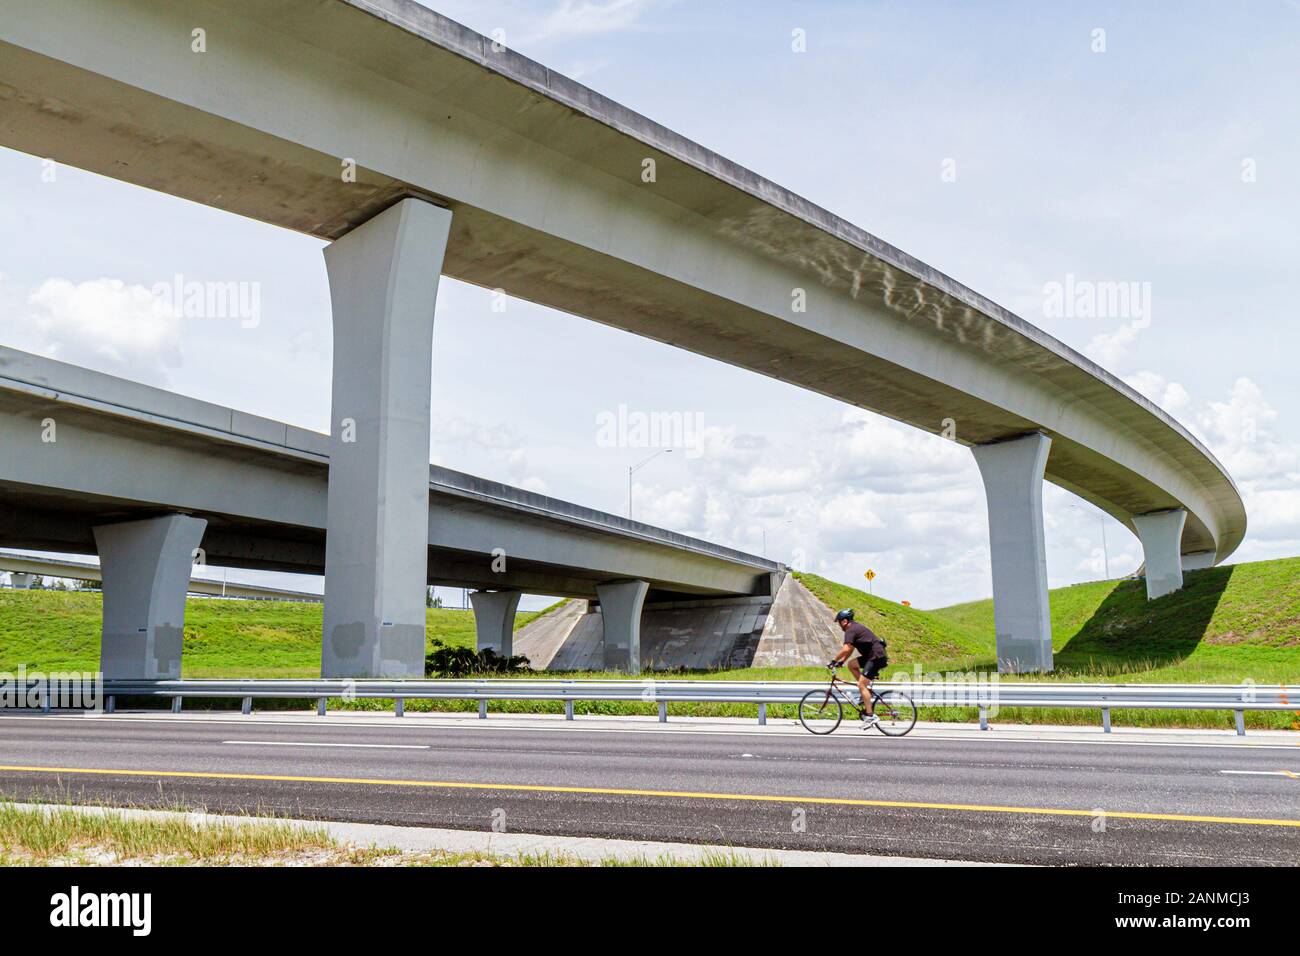 Fort ft. Lauderdale Florida,Sunrise,Interstate 75,i 75,autostrada sopraelevata,trespolo in cemento,span,bicicletta ciclisti bicicletta bicicletta bicicletta bicicletta, corsa in bicicletta Foto Stock